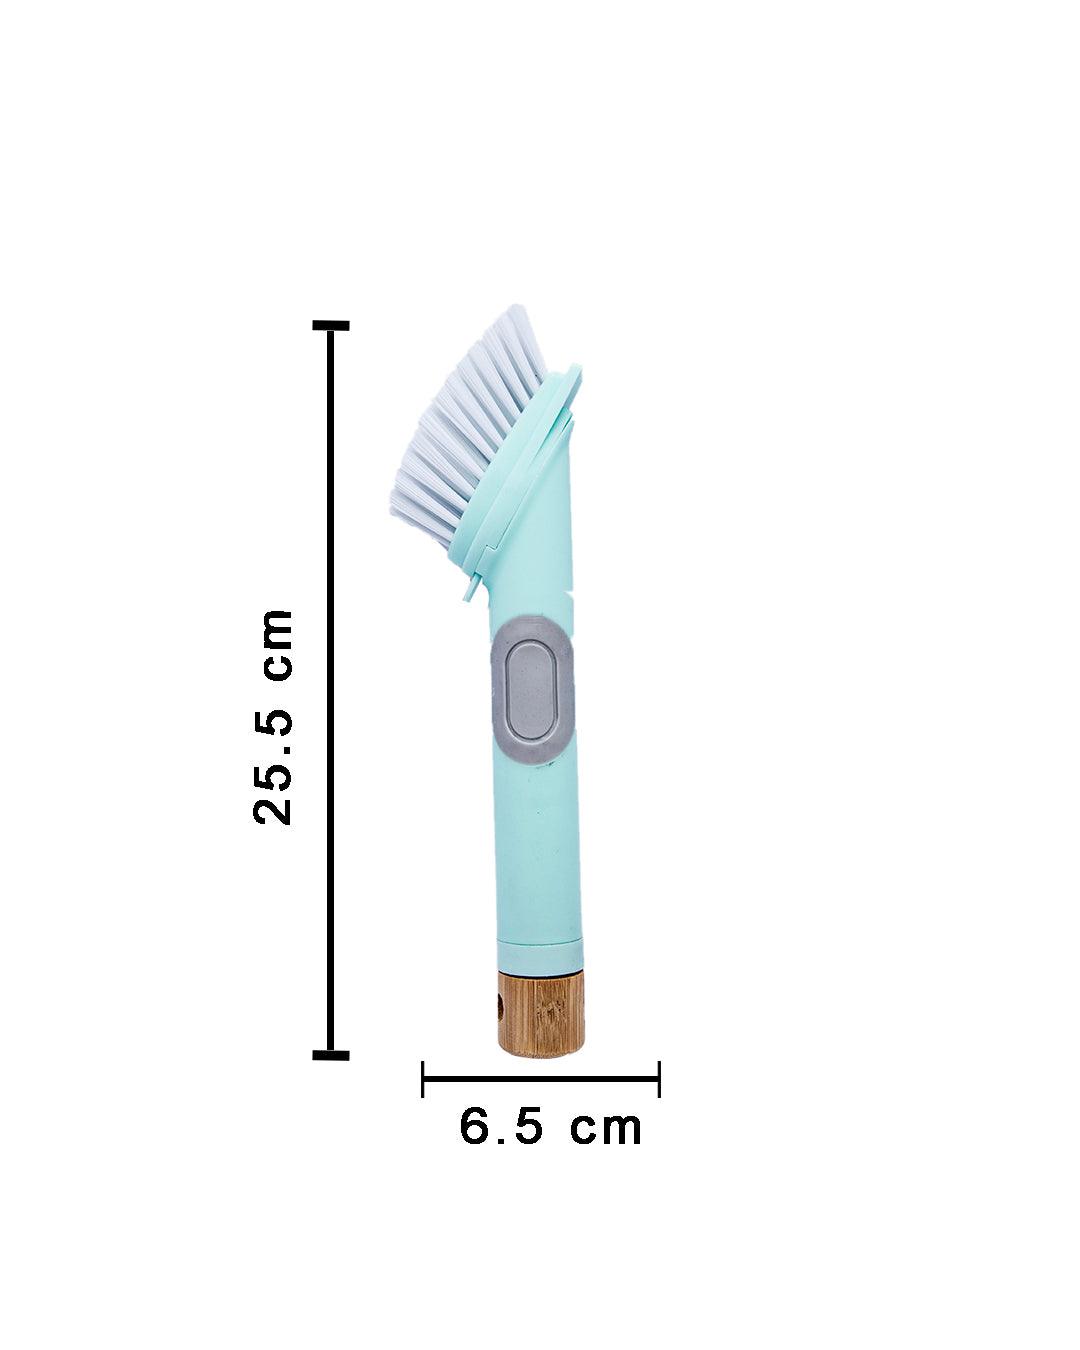 VON CASA Soap Dispensing Dish Brush with Bamboo Long Handle - MARKET 99